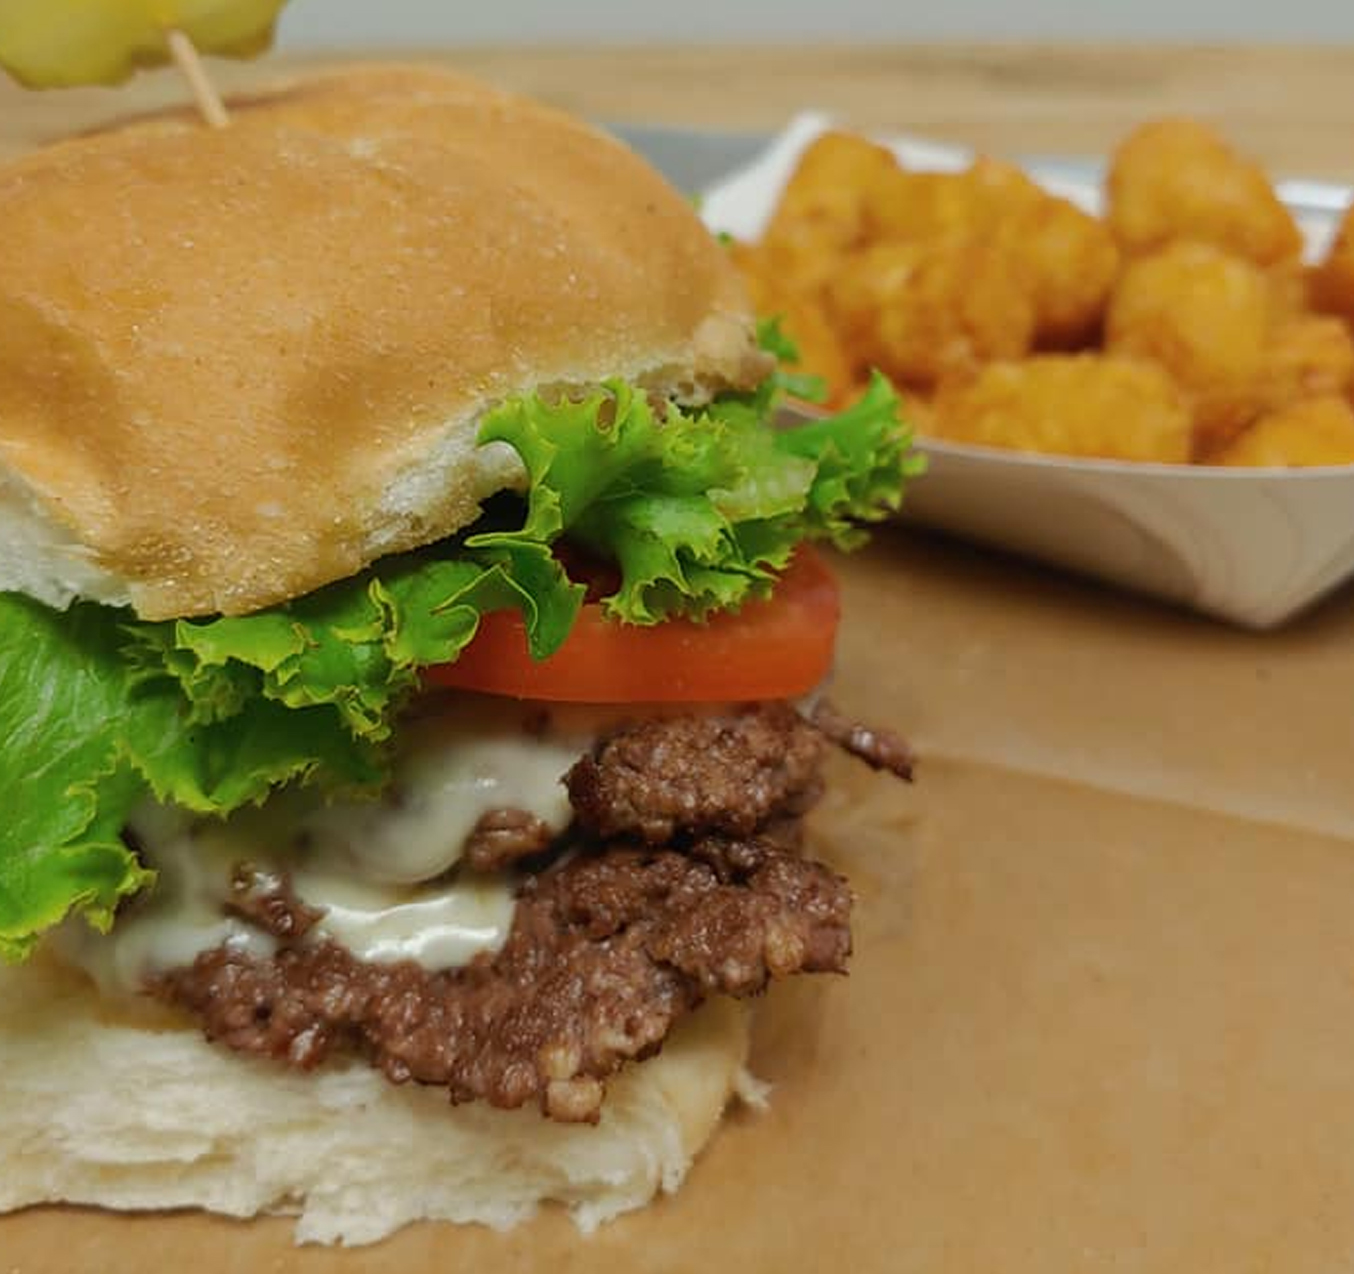 Where to Eat In Green Bay - Al's Hamburger Shop